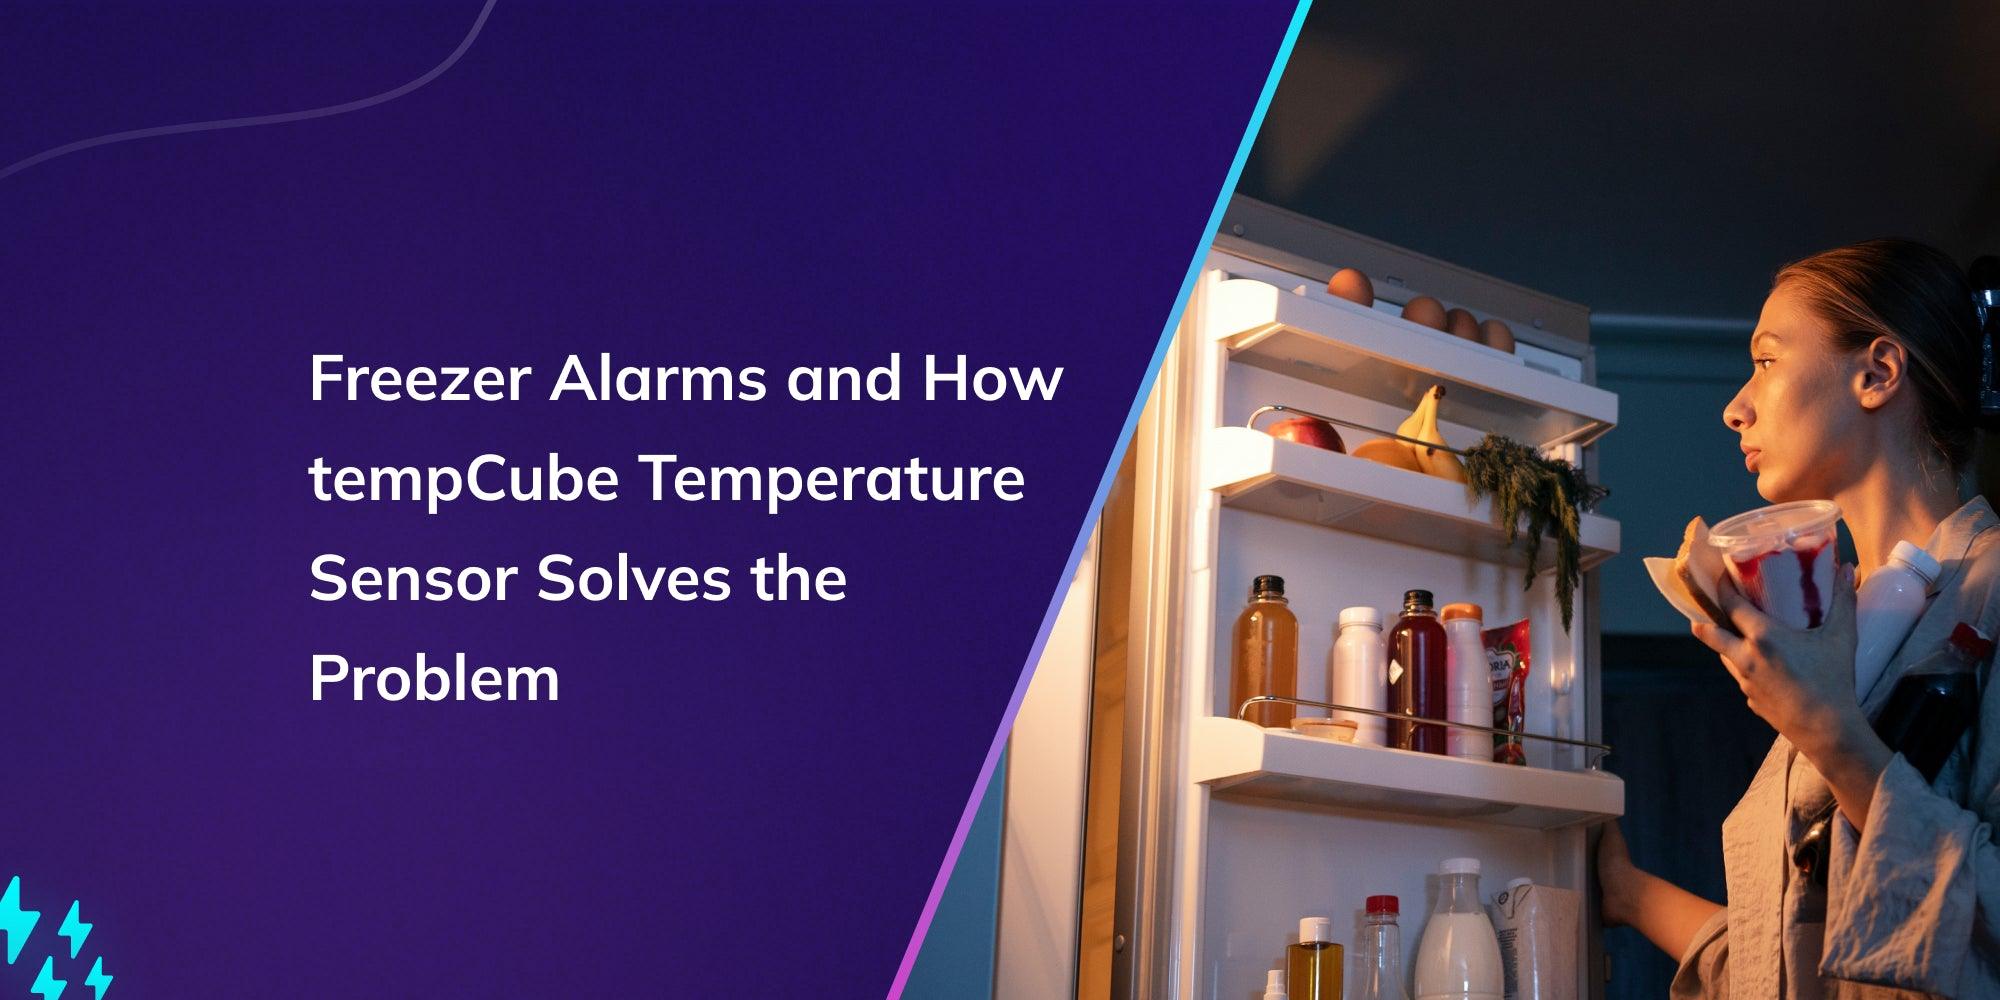 Freezer Alarms and How tempCube Temperature Sensor Solves the Problem